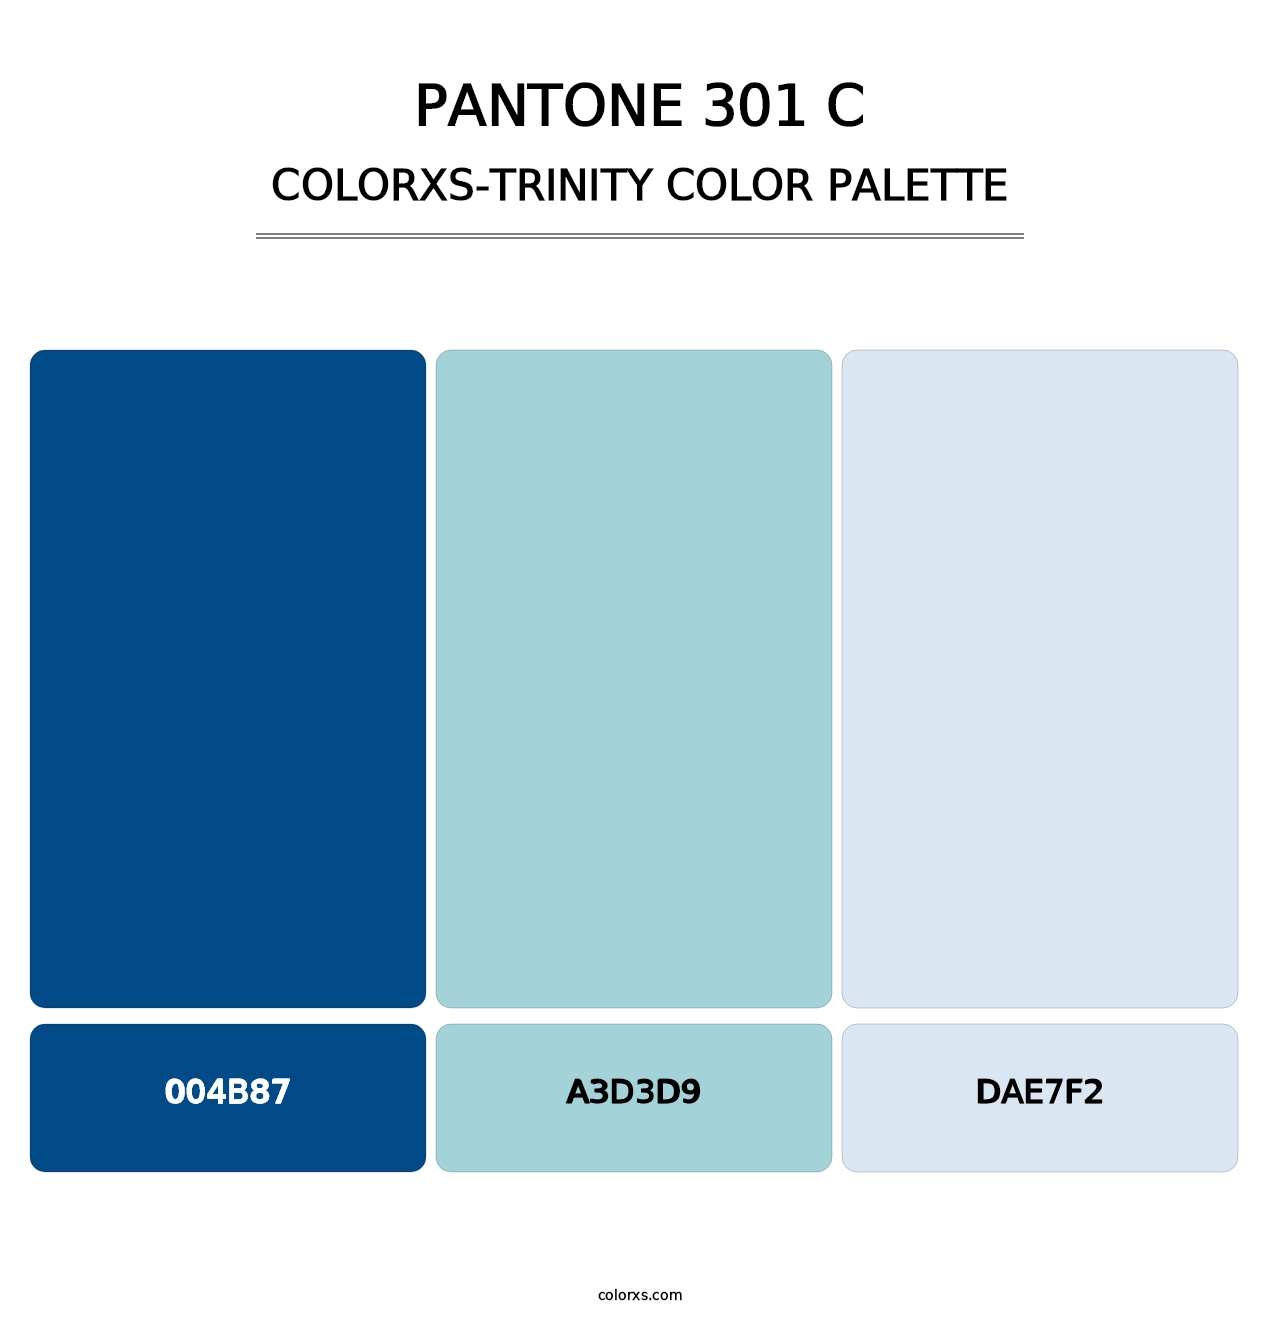 PANTONE 301 C - Colorxs Trinity Palette